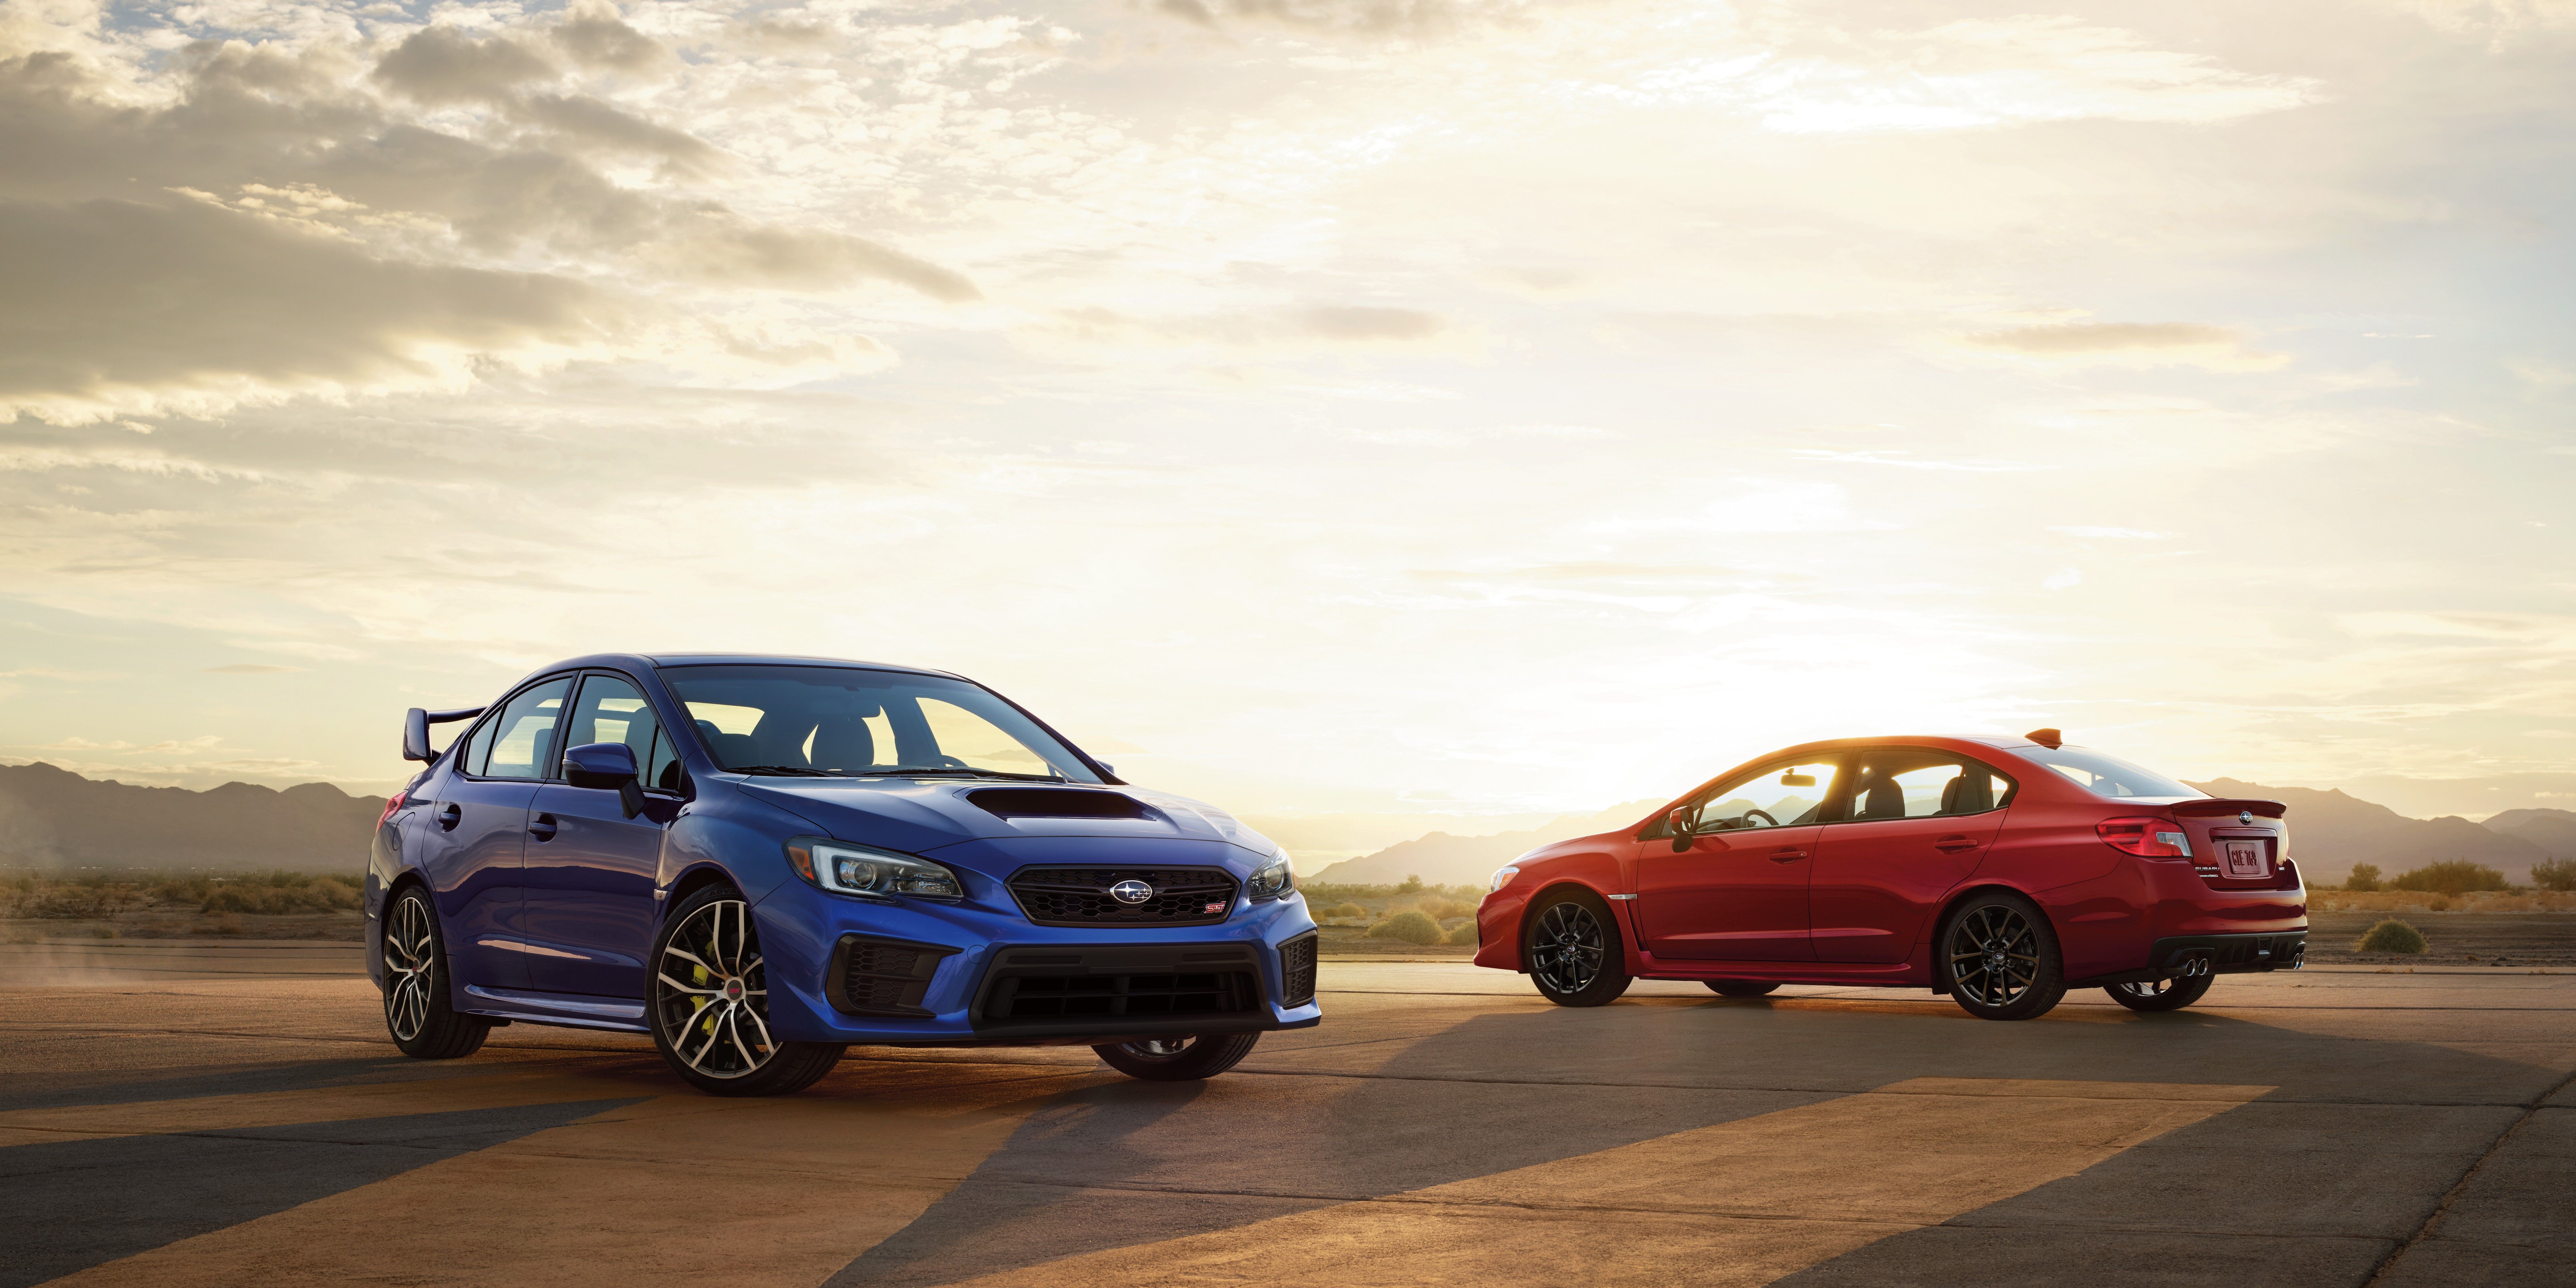 Subaru Is Exploring Its Options For the Next WRX STI